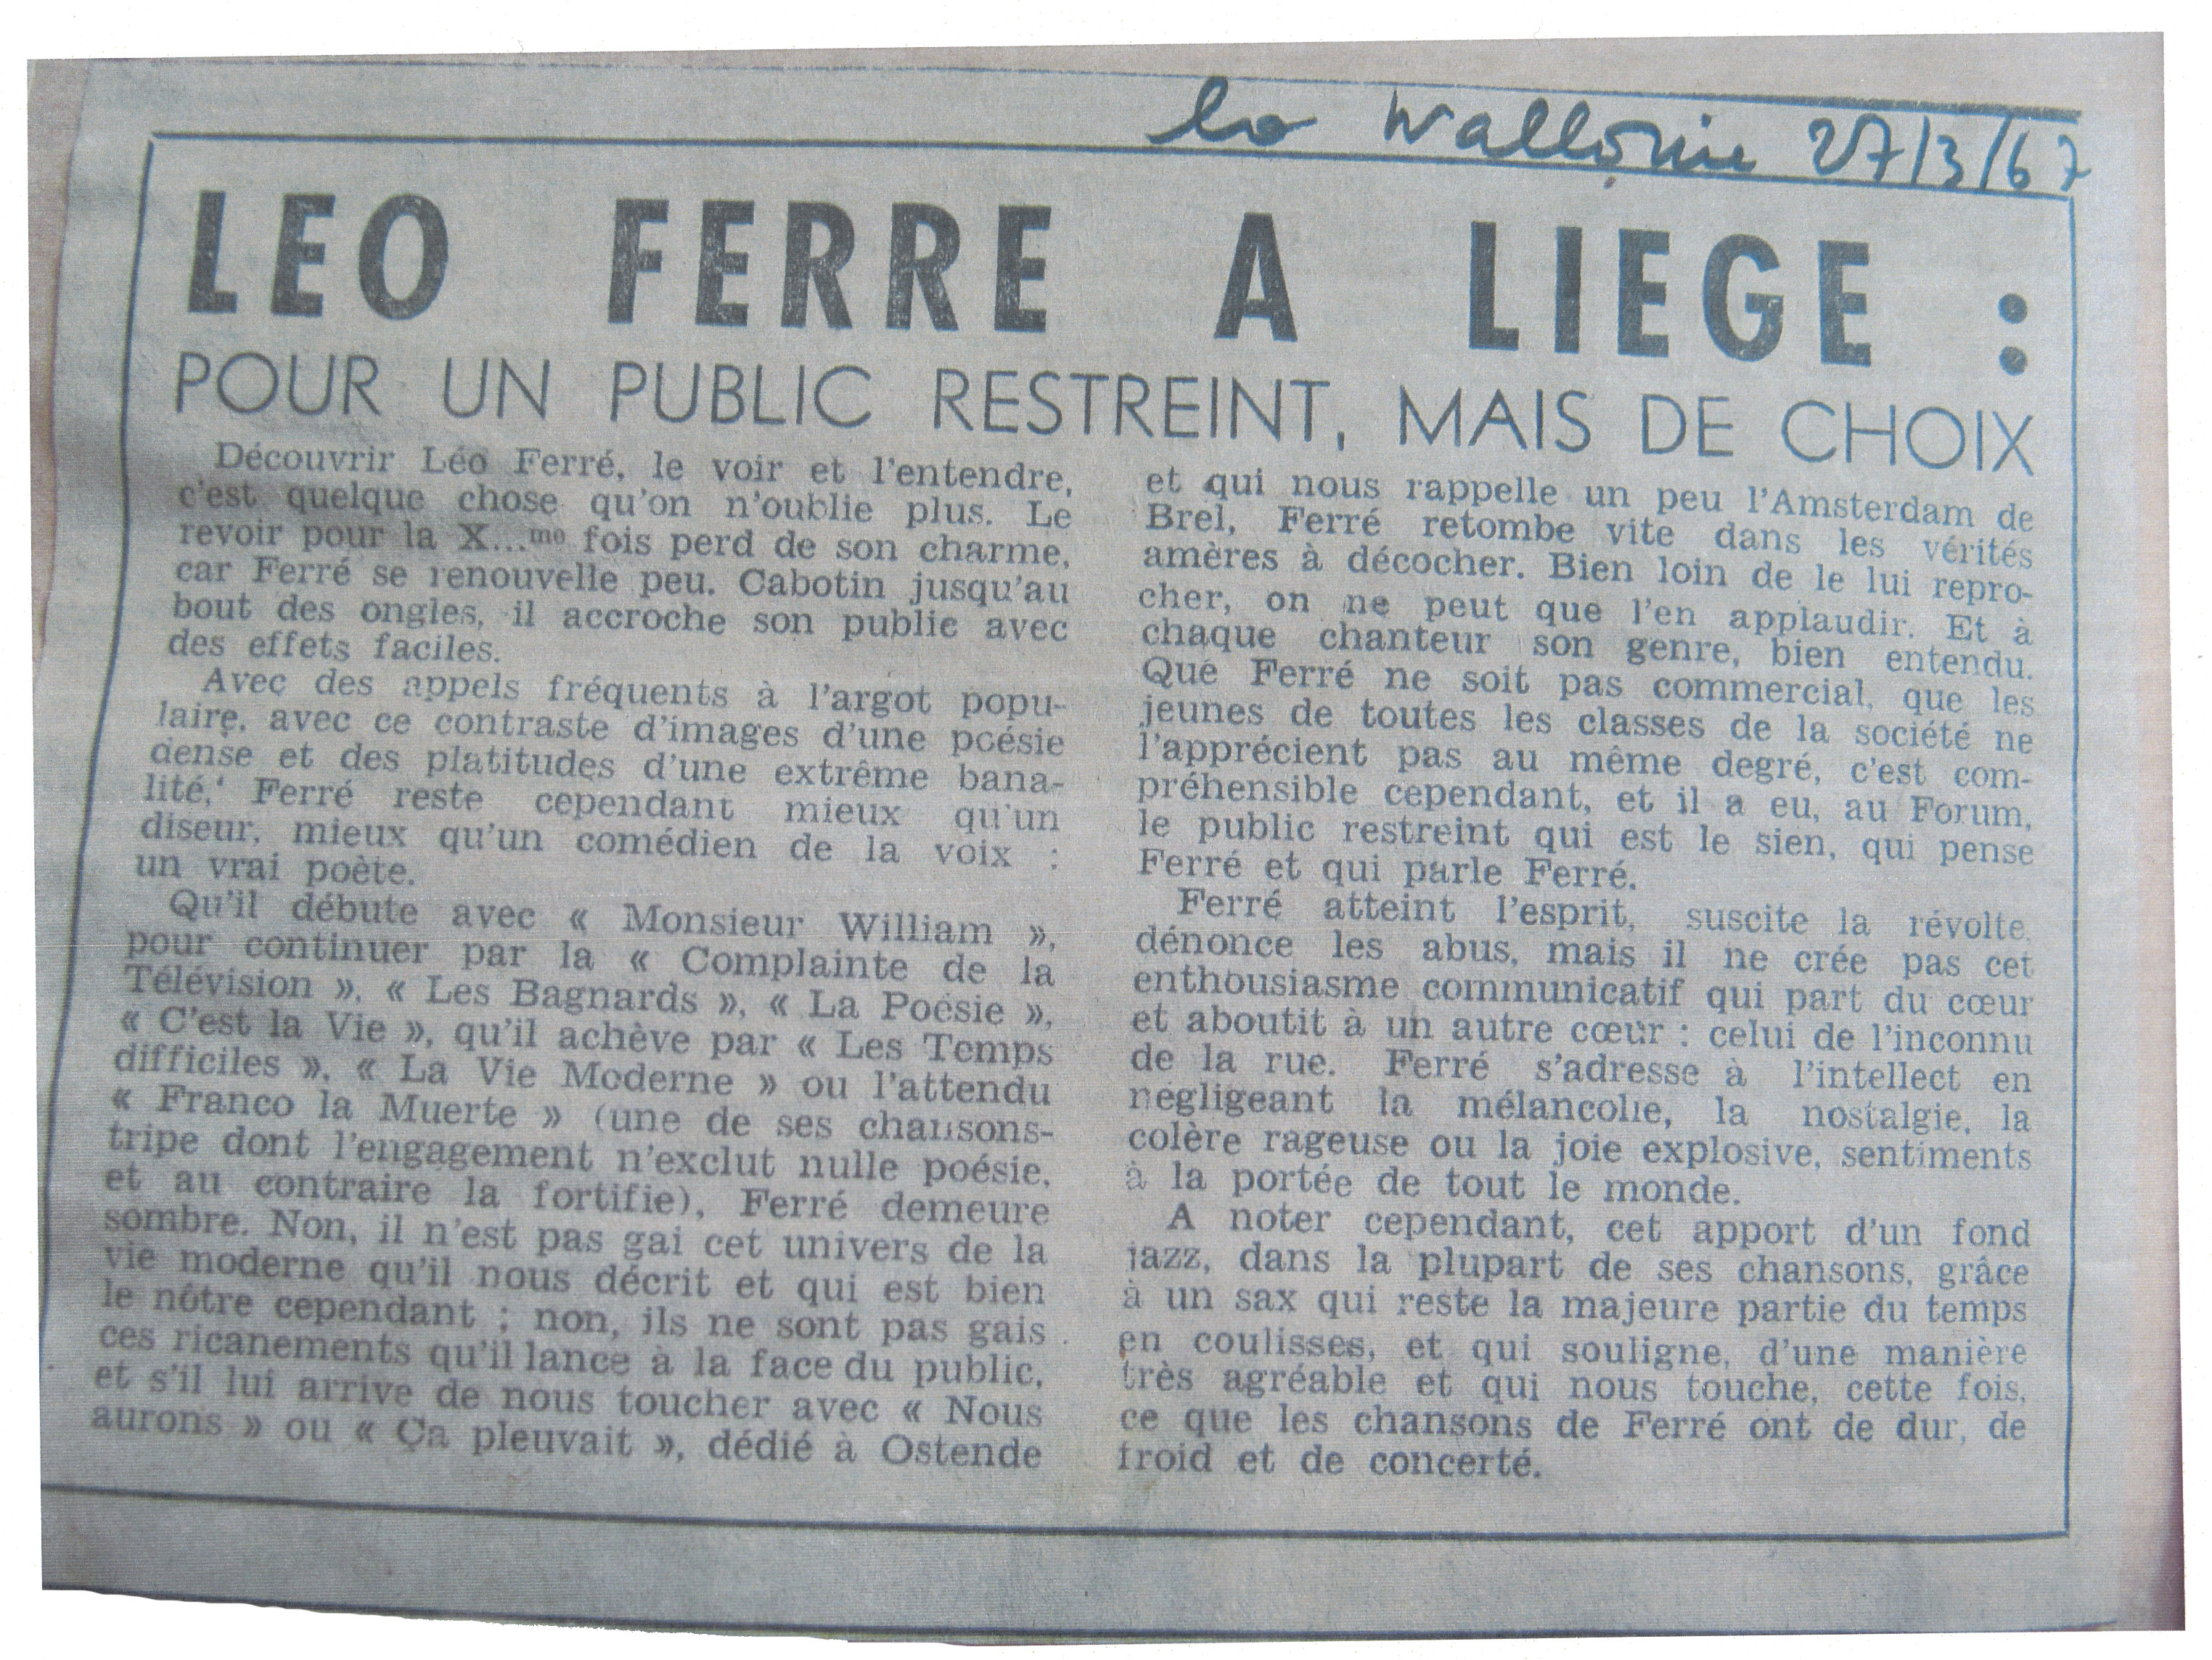 Léo Ferré - La Wallonie du 27 mars 1967